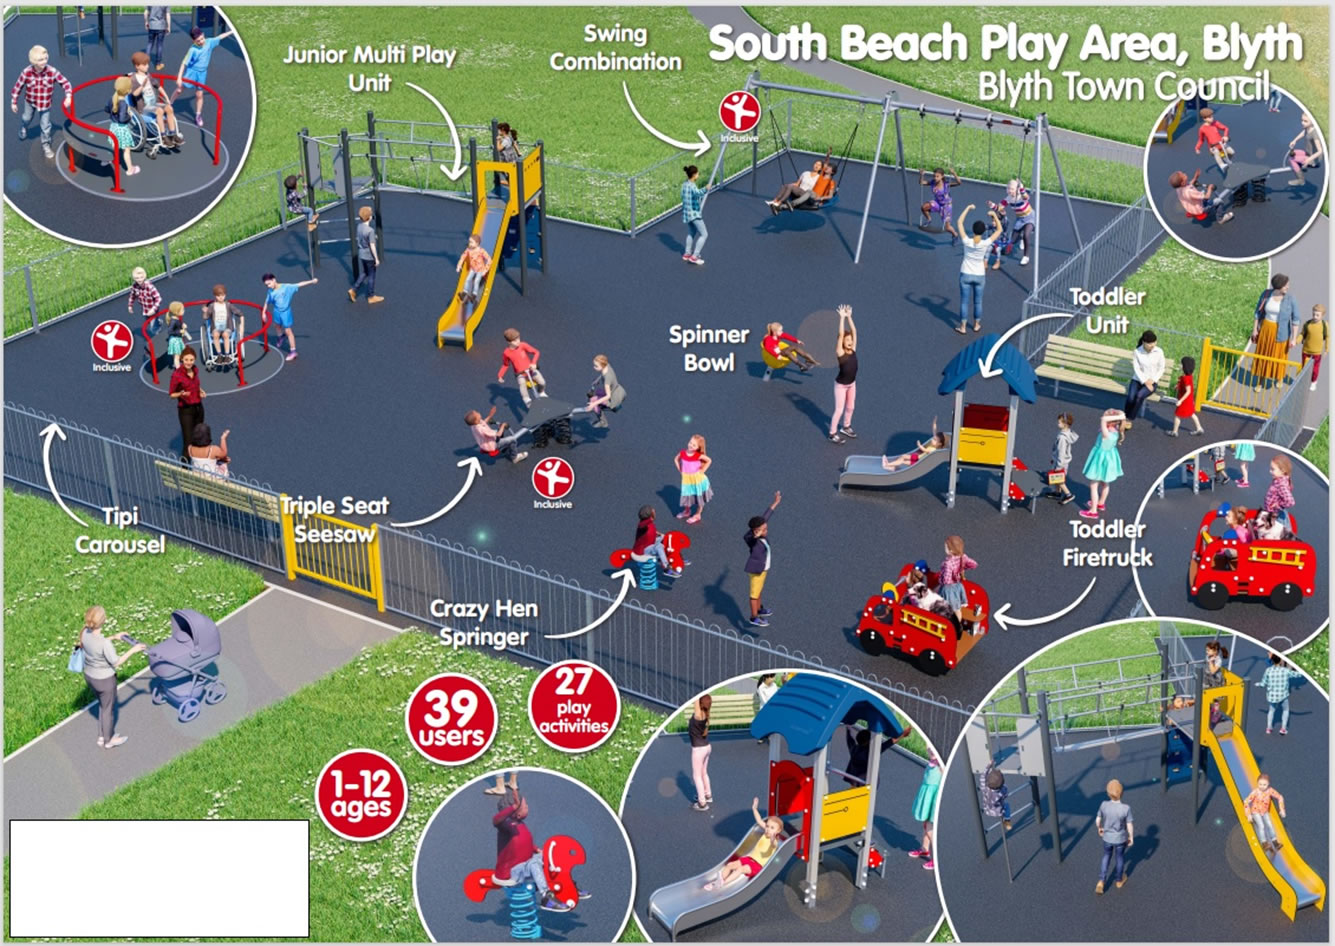 South Beach Play Area Update - Refurbishment complete